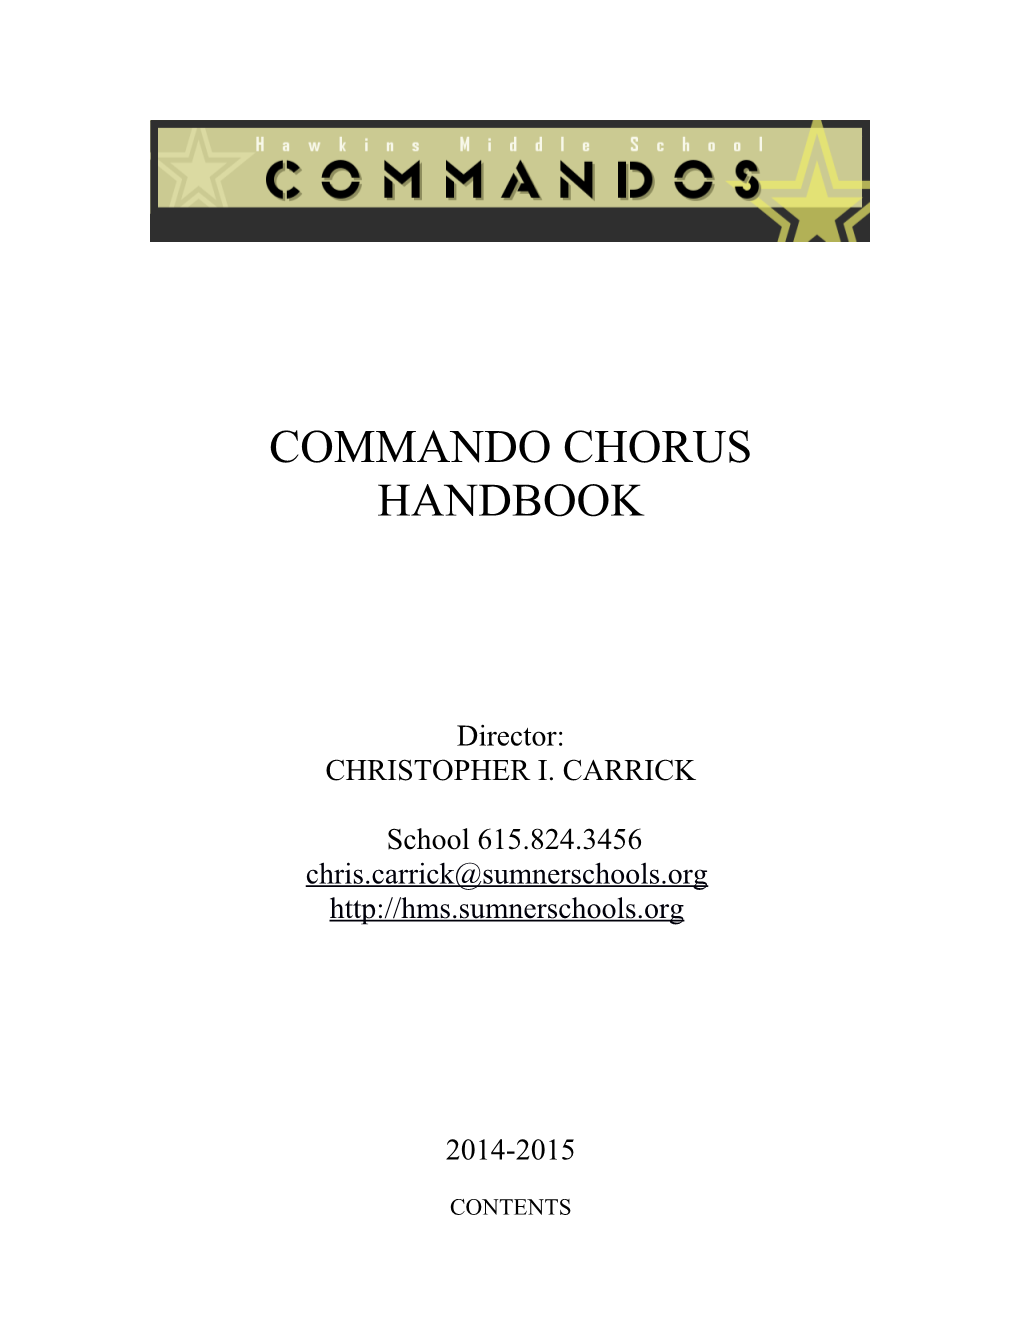 Commando Chorus